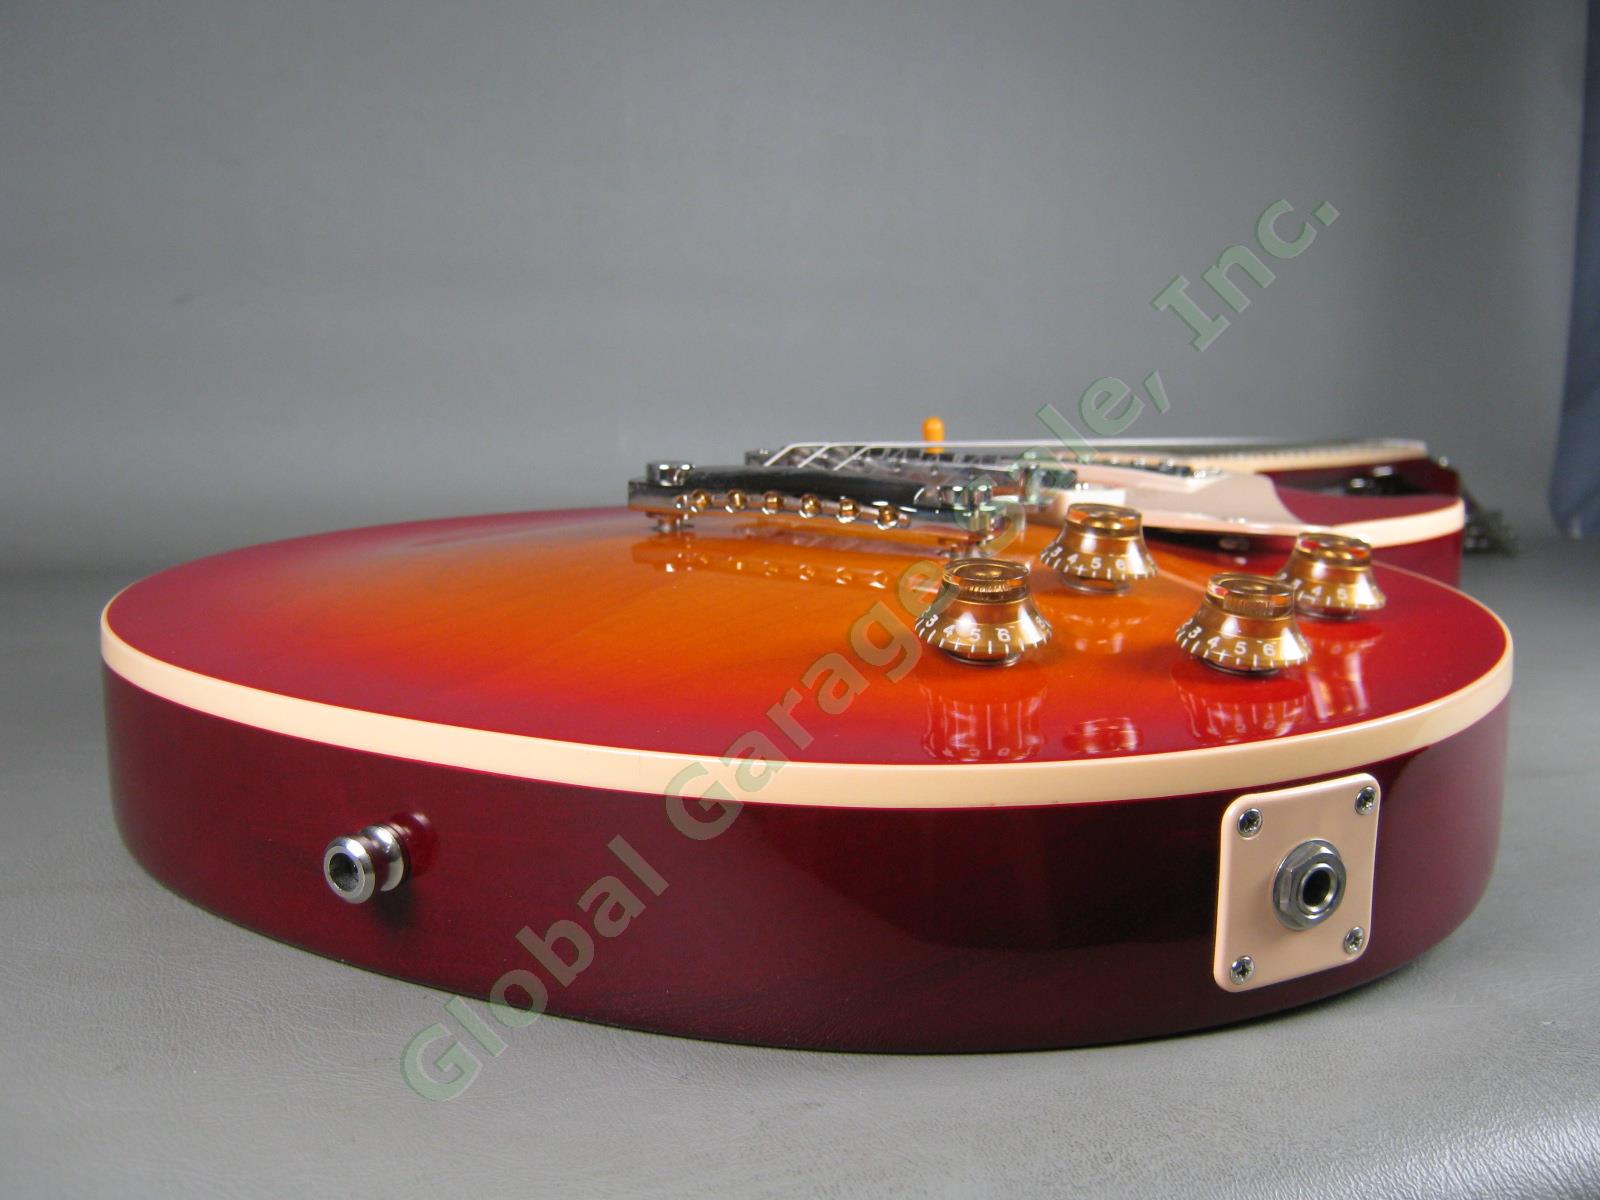 MINT! 2001 Gibson Les Paul Classic 1960 Reissue Sunburst Guitar One Owner w/Case 11